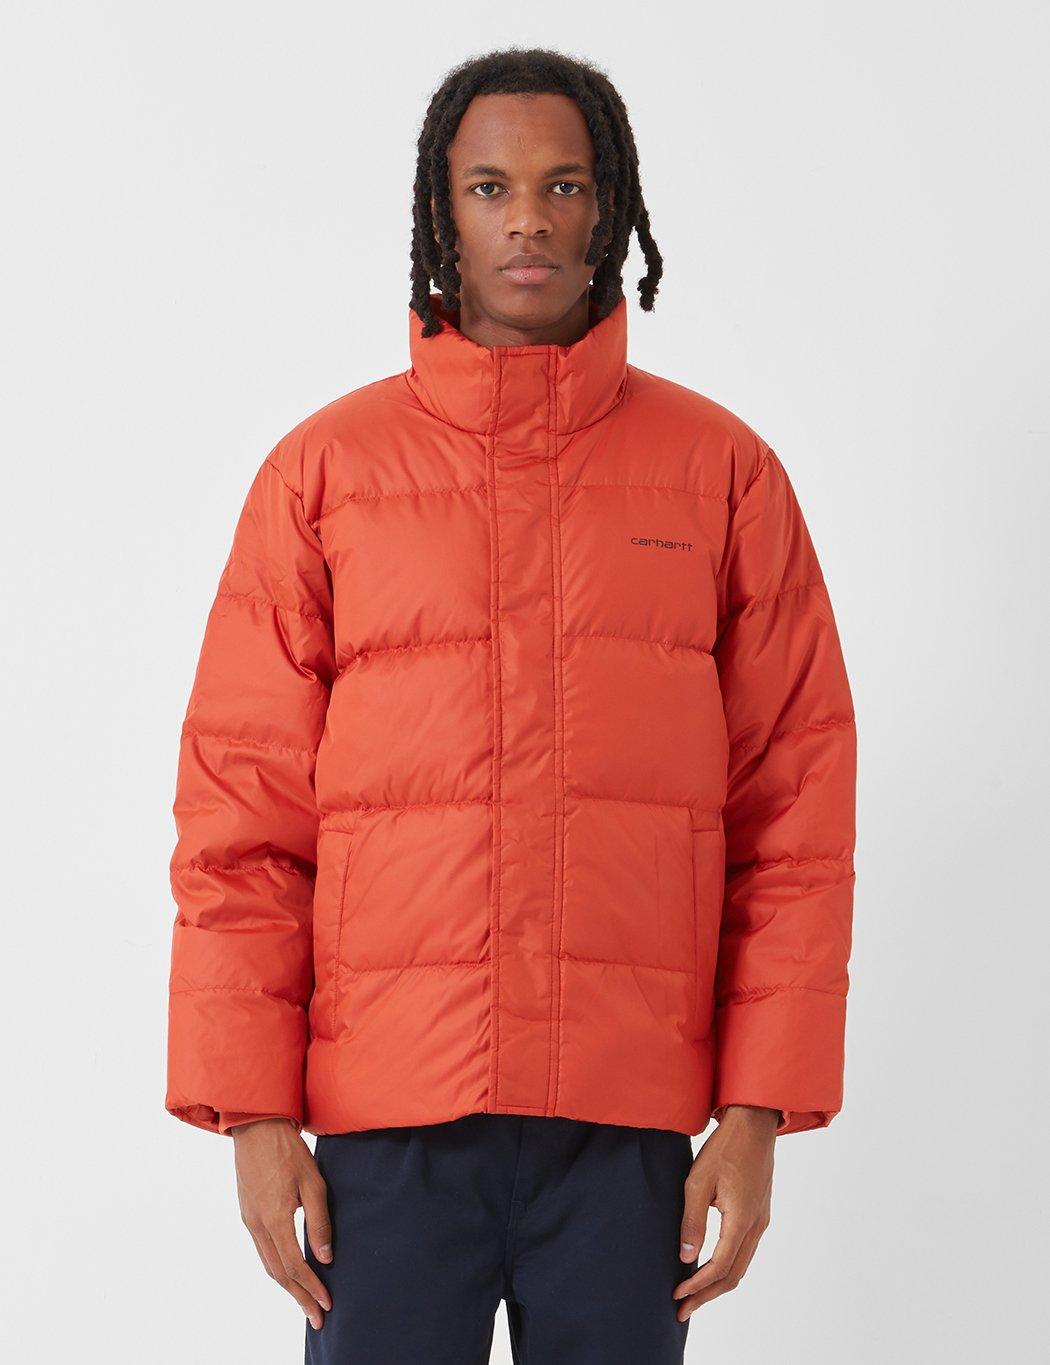 Carhartt Synthetic Wip Deming Jacket (down) in Orange for Men - Lyst